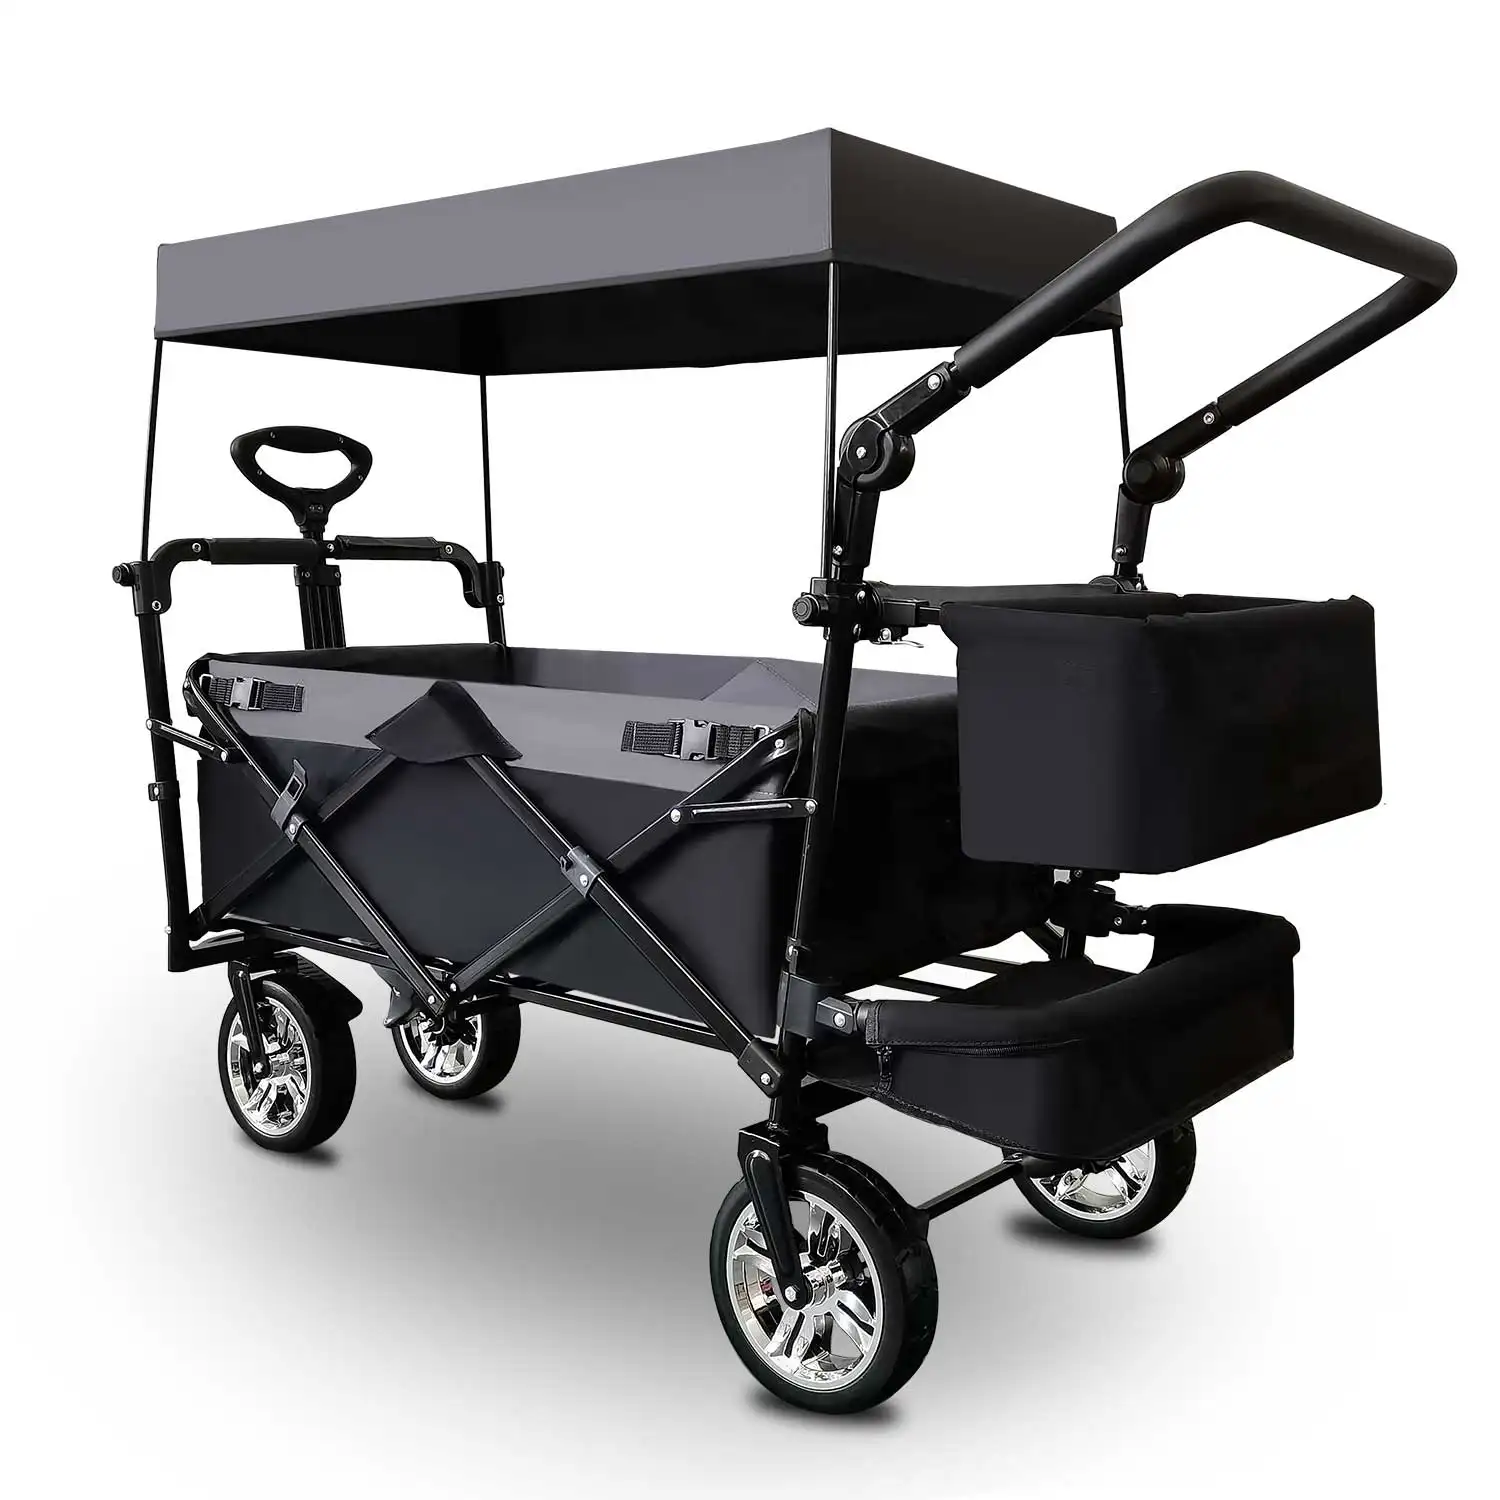 Carro utilitario plegable para camping, carro de jardín con 4 ruedas